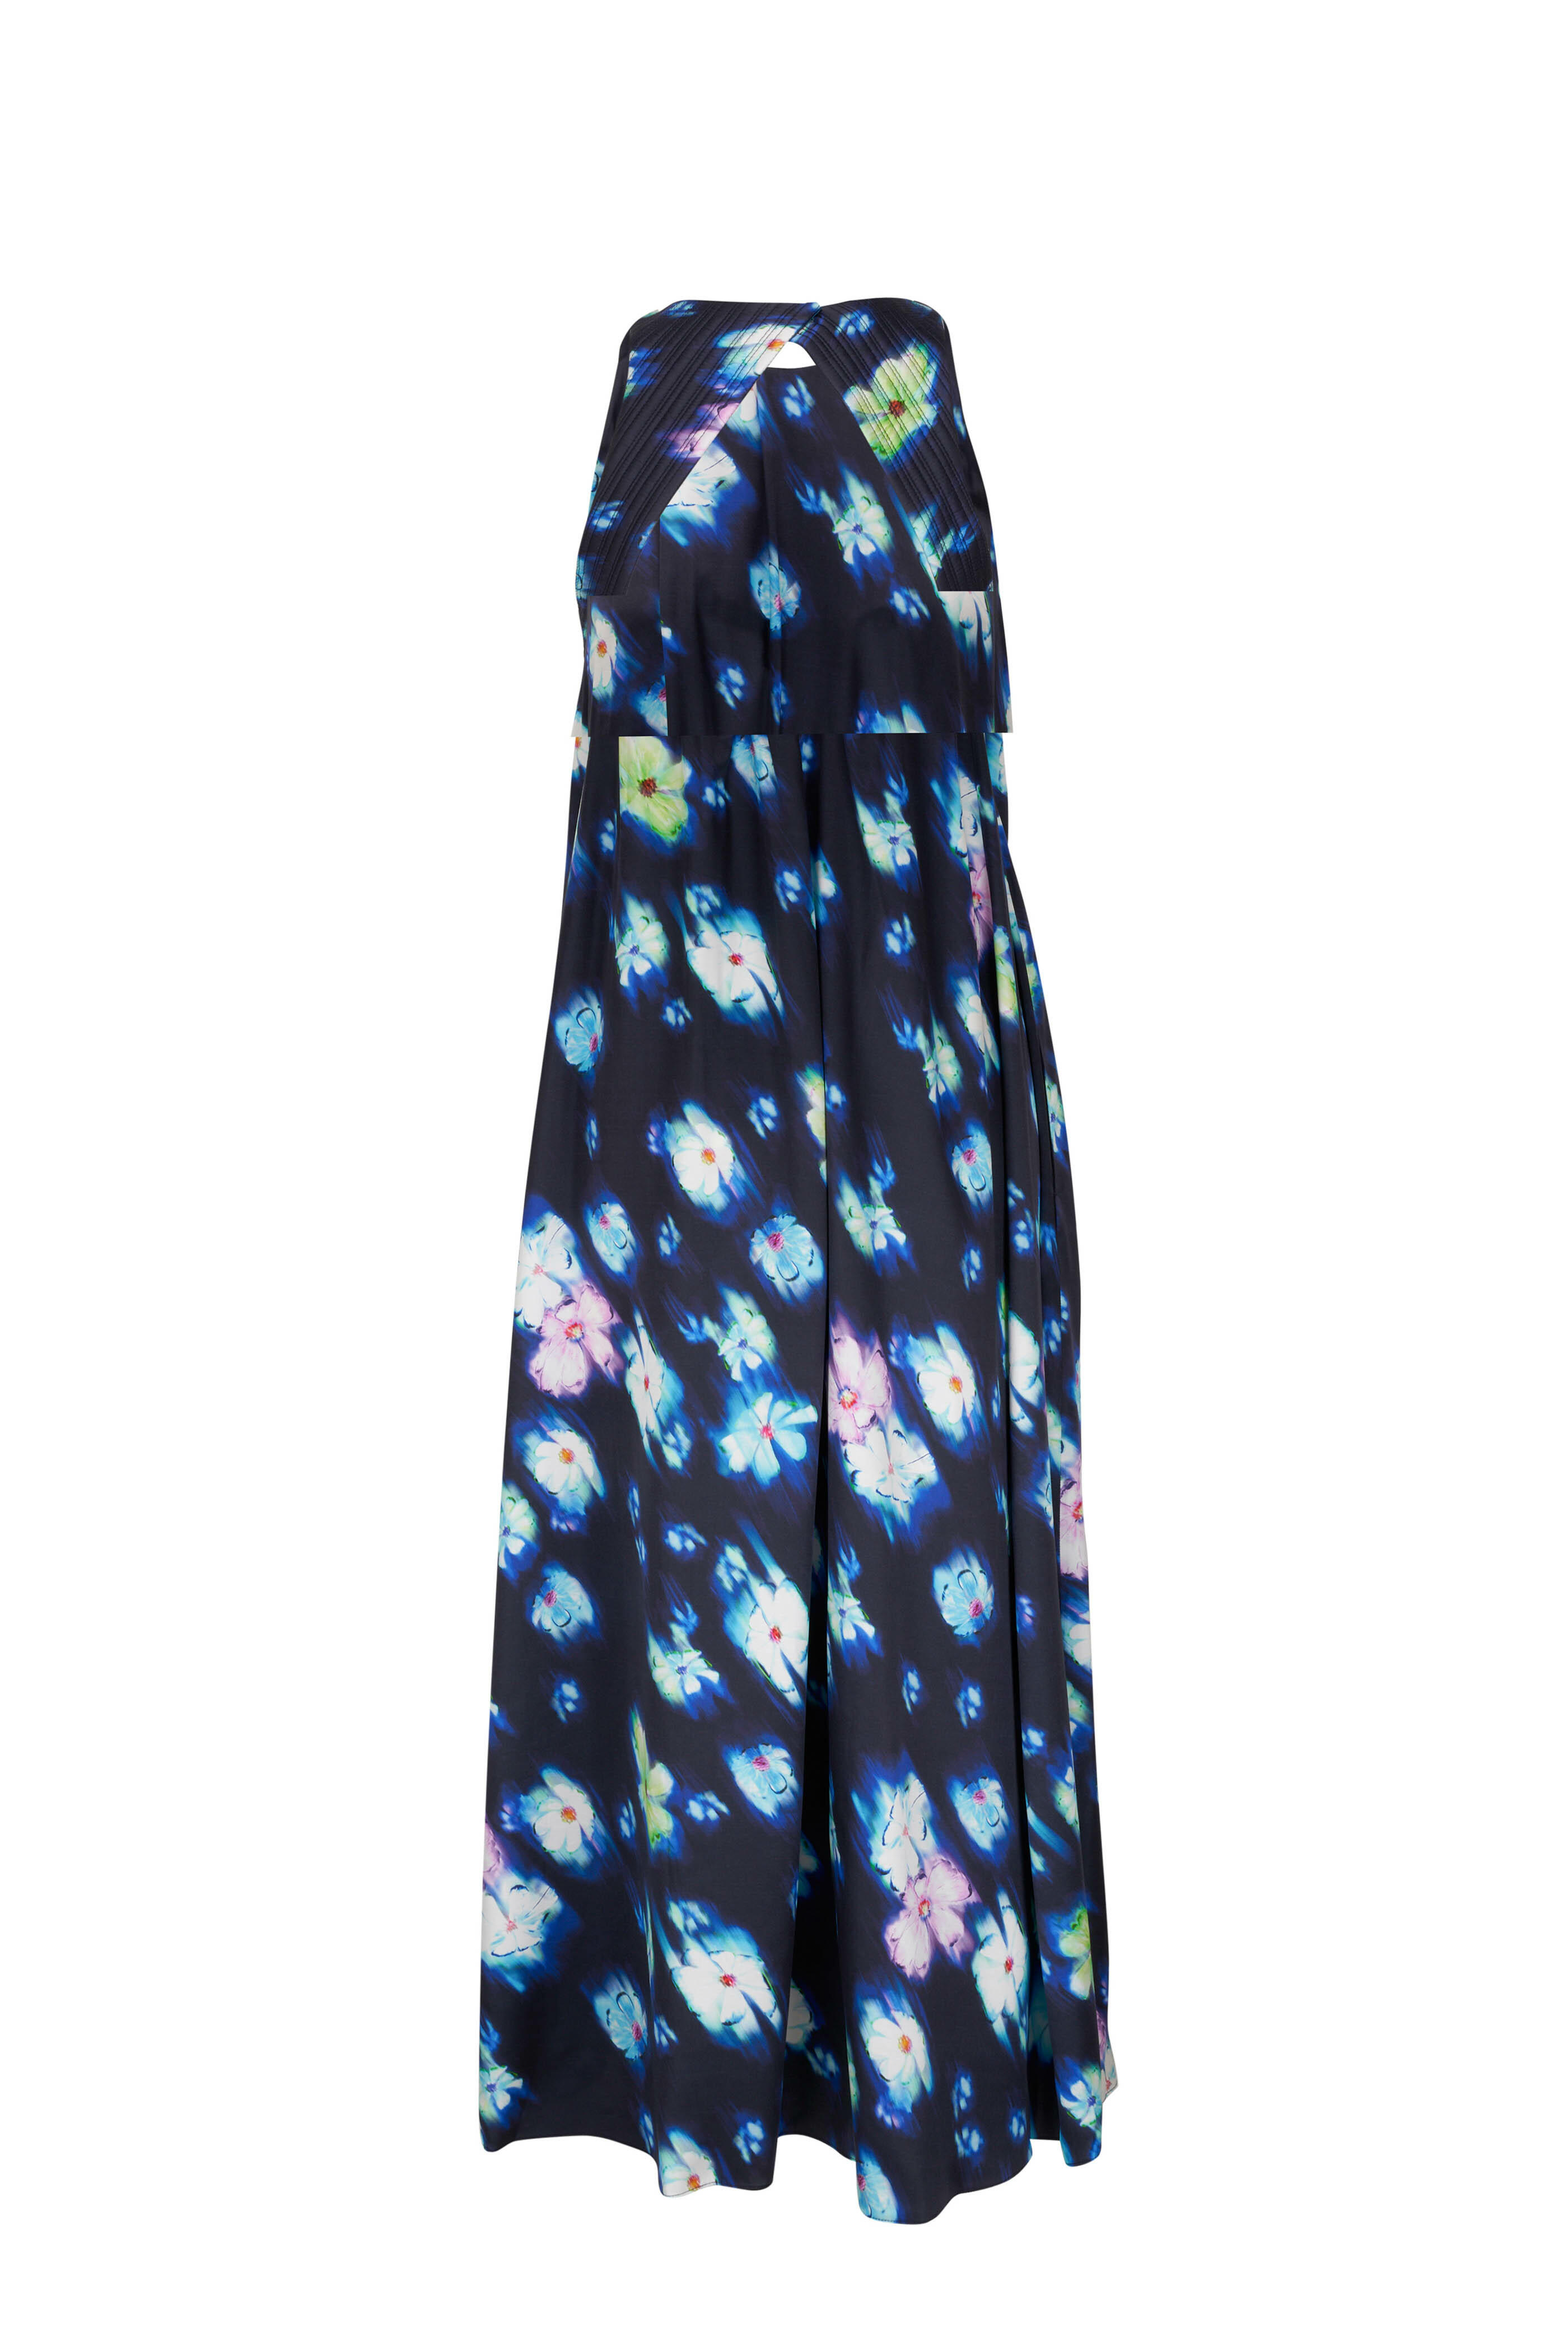 Dorothee Schumacher - Neon Blooming Vibrant Flowers Satin Dress